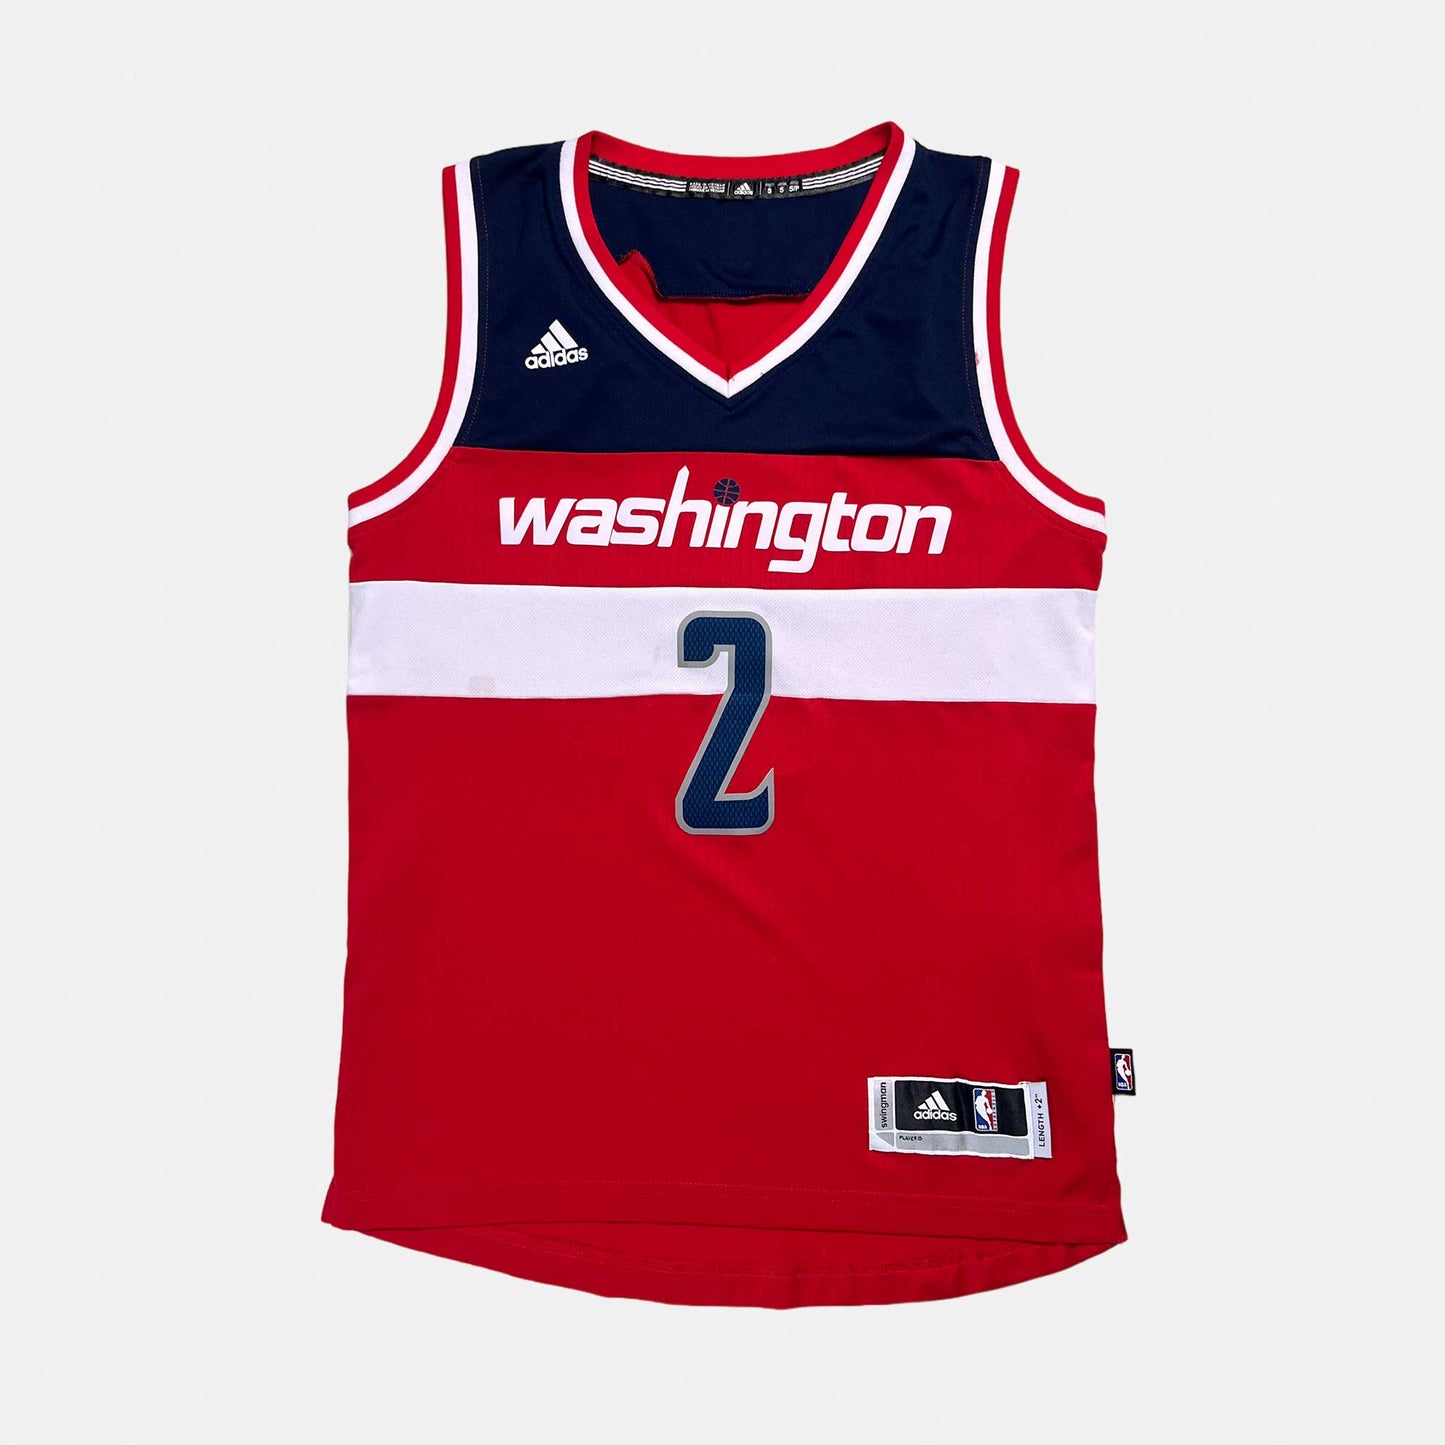 Washington Wizards - John Wall - Größe S - Adidas - NBA Trikot